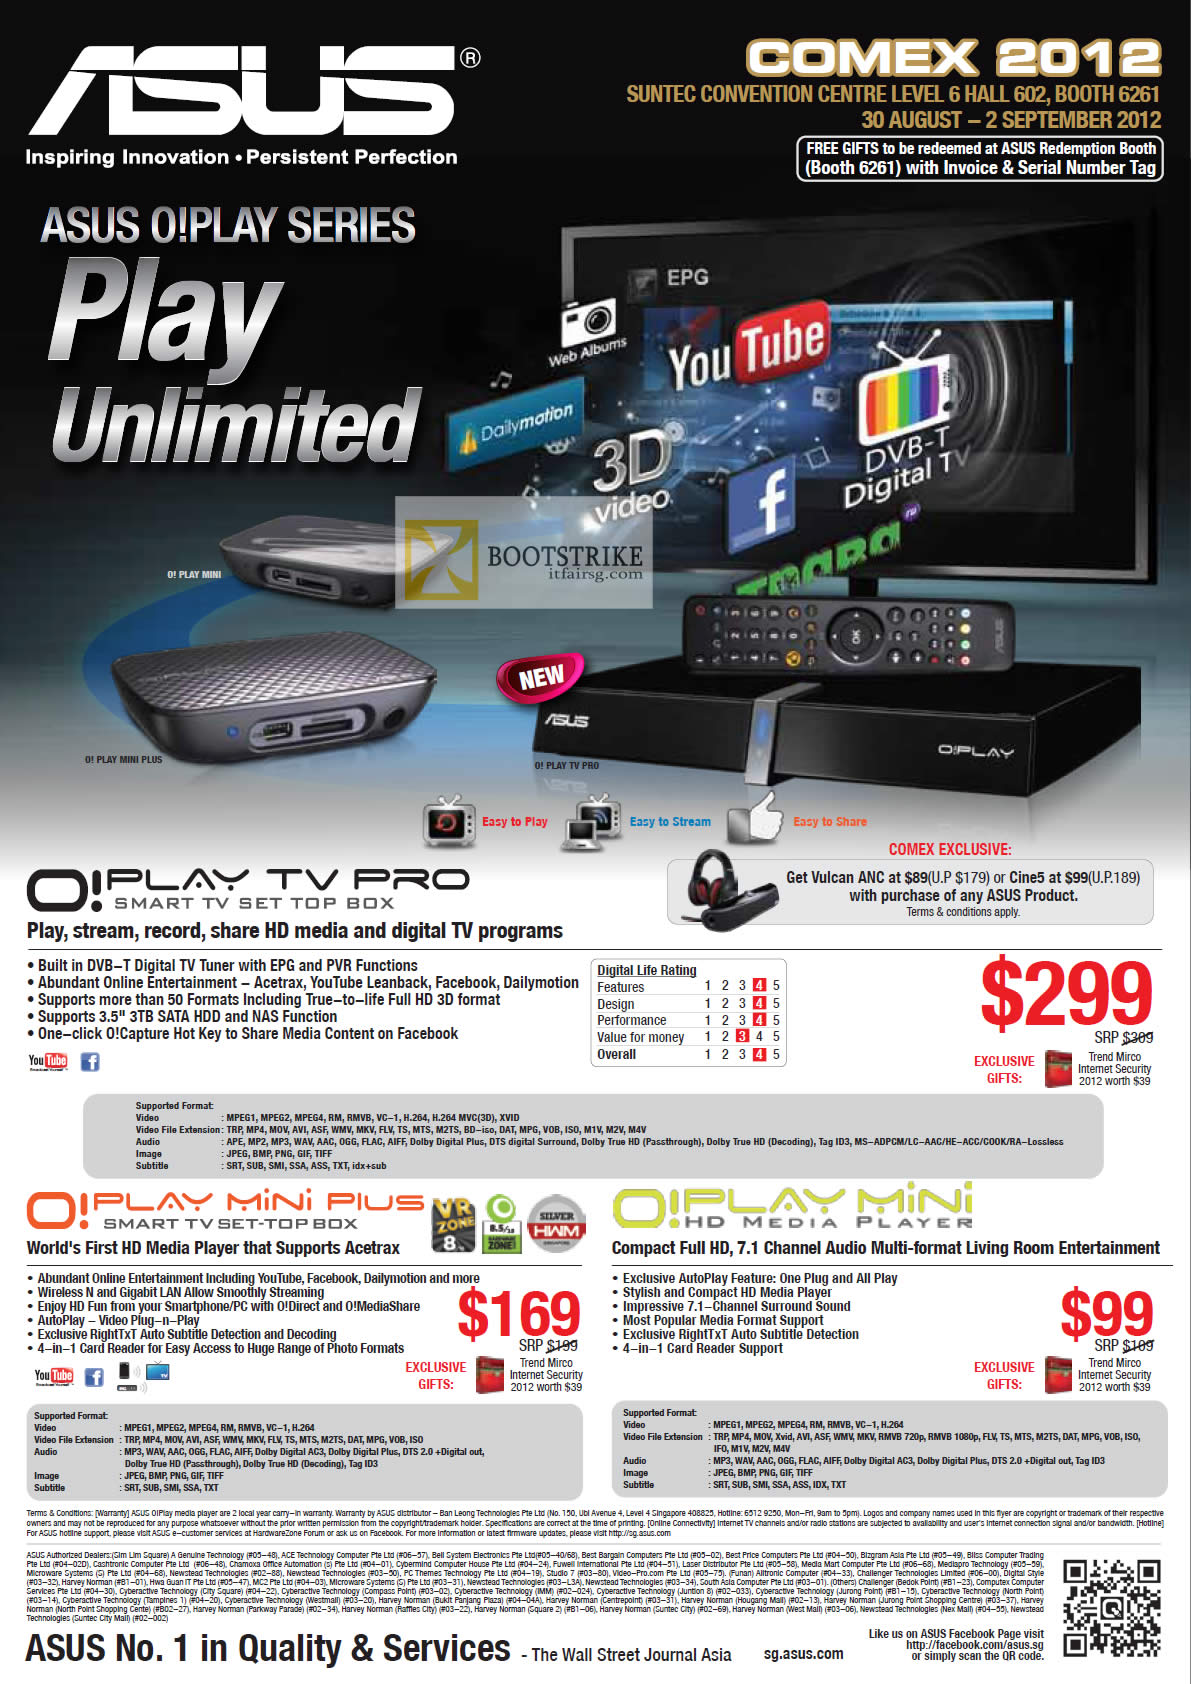 COMEX 2012 price list image brochure of ASUS Media Player O Play TV Pro Smart TV Set Top Box, O Play Mini Plus, Mini HD Media Player